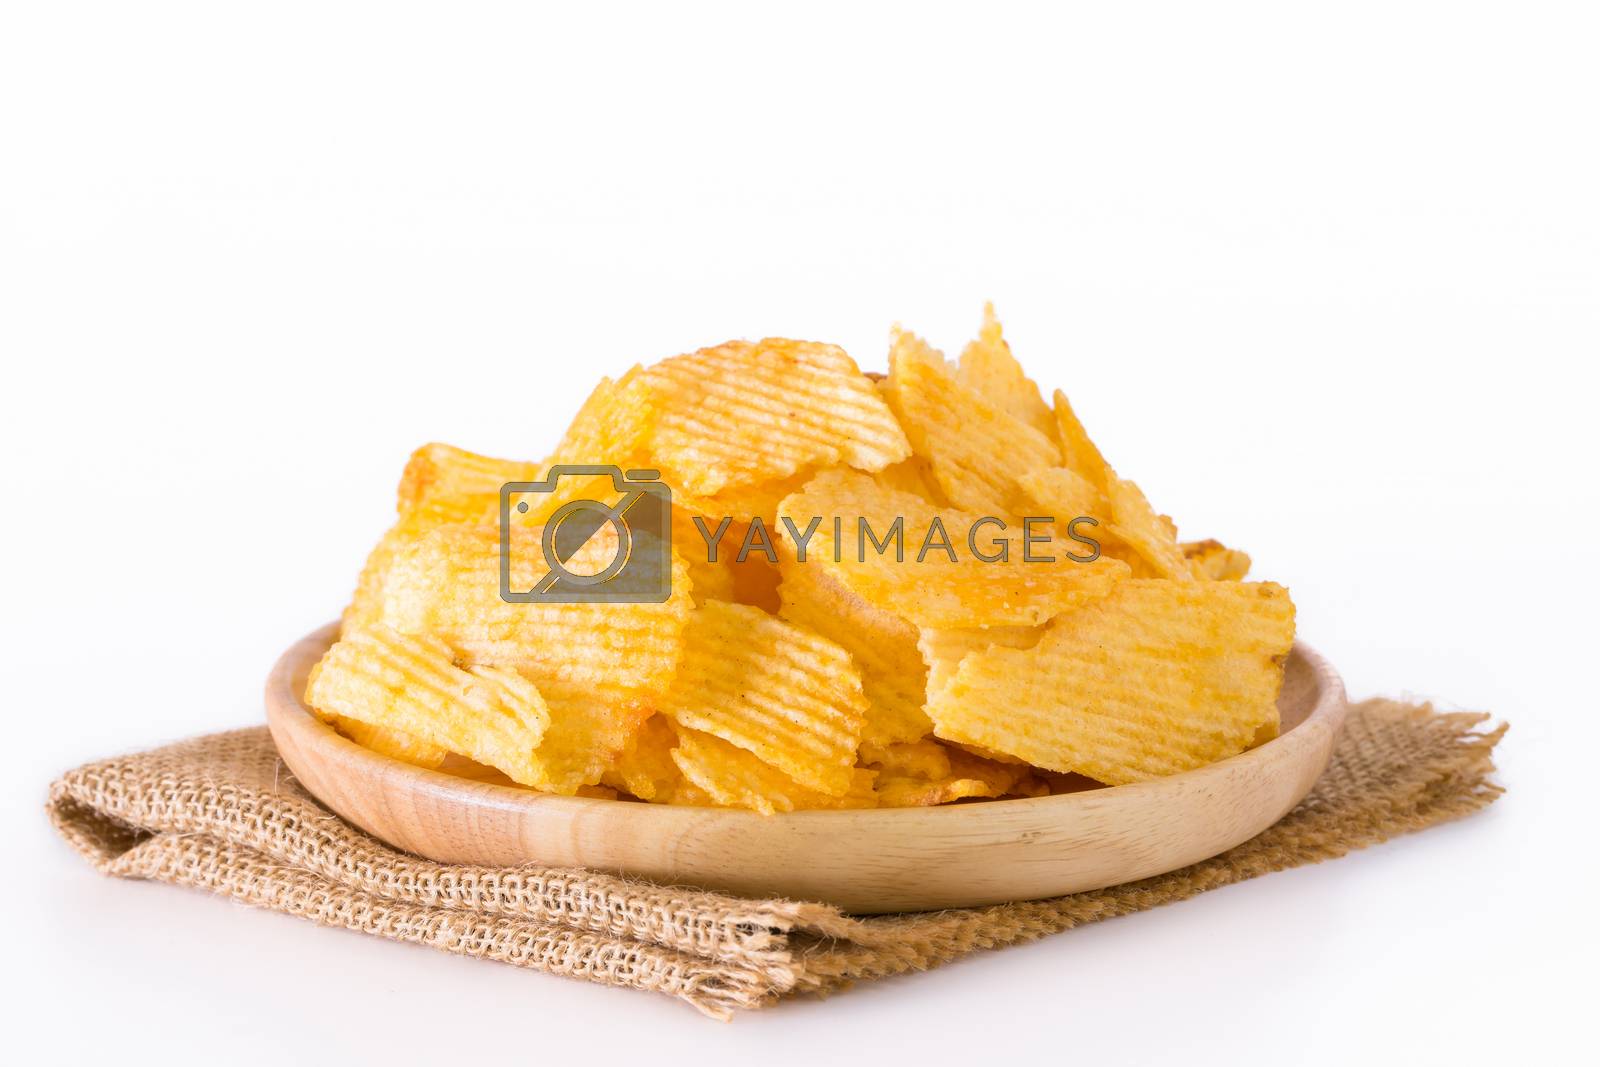 Royalty free image of Crispy potato chips by boar26